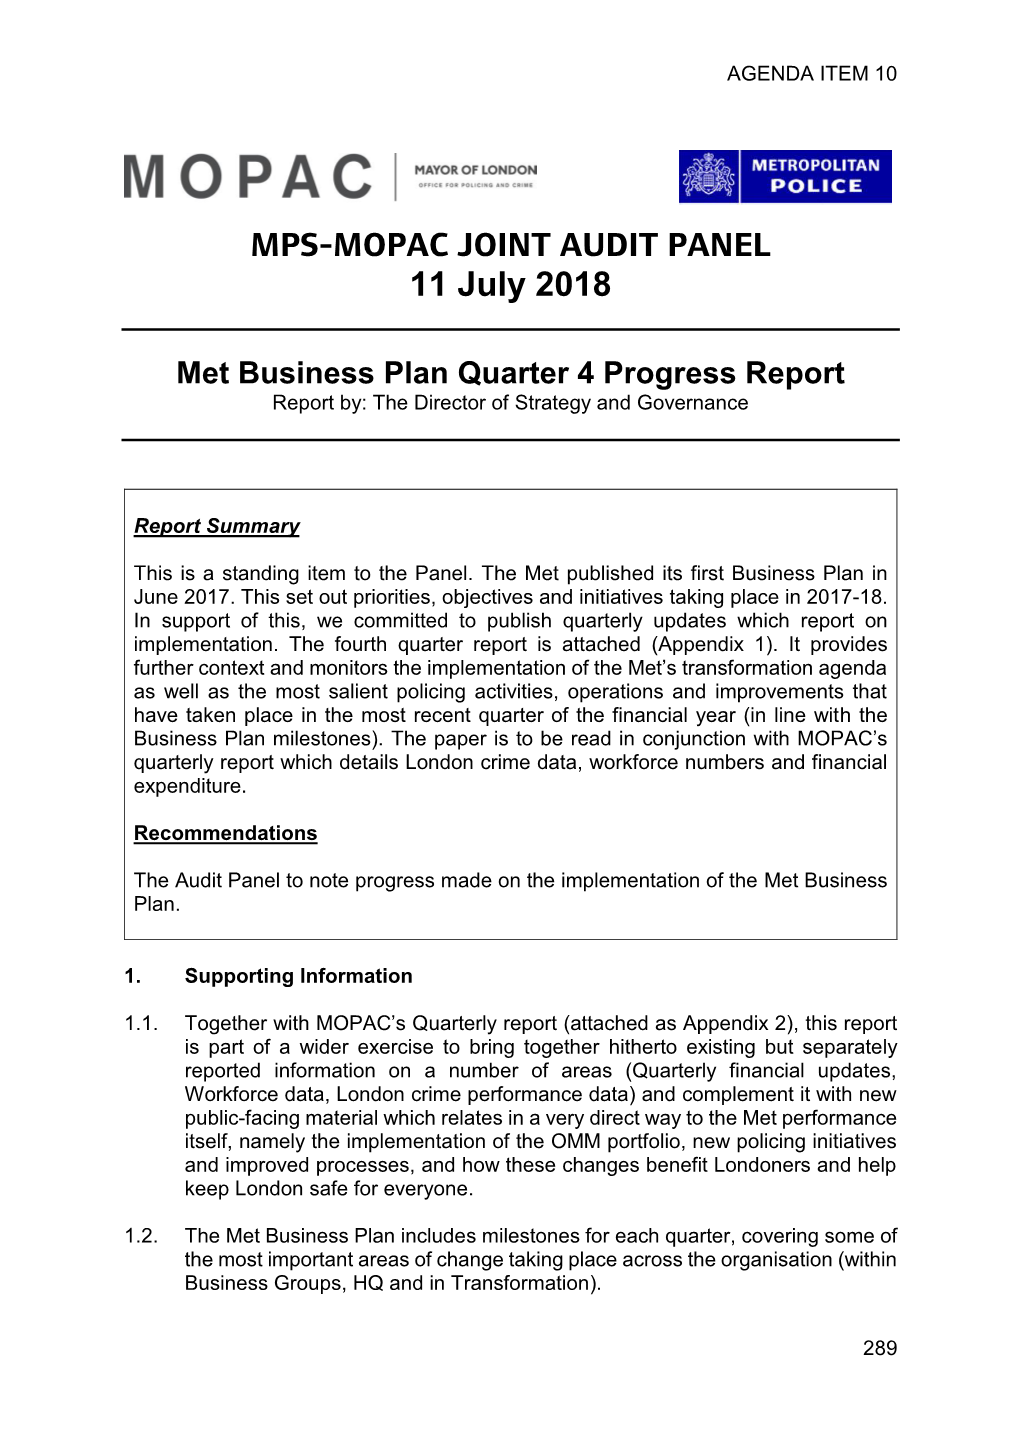 MPS-MOPAC JOINT AUDIT PANEL 11 July 2018